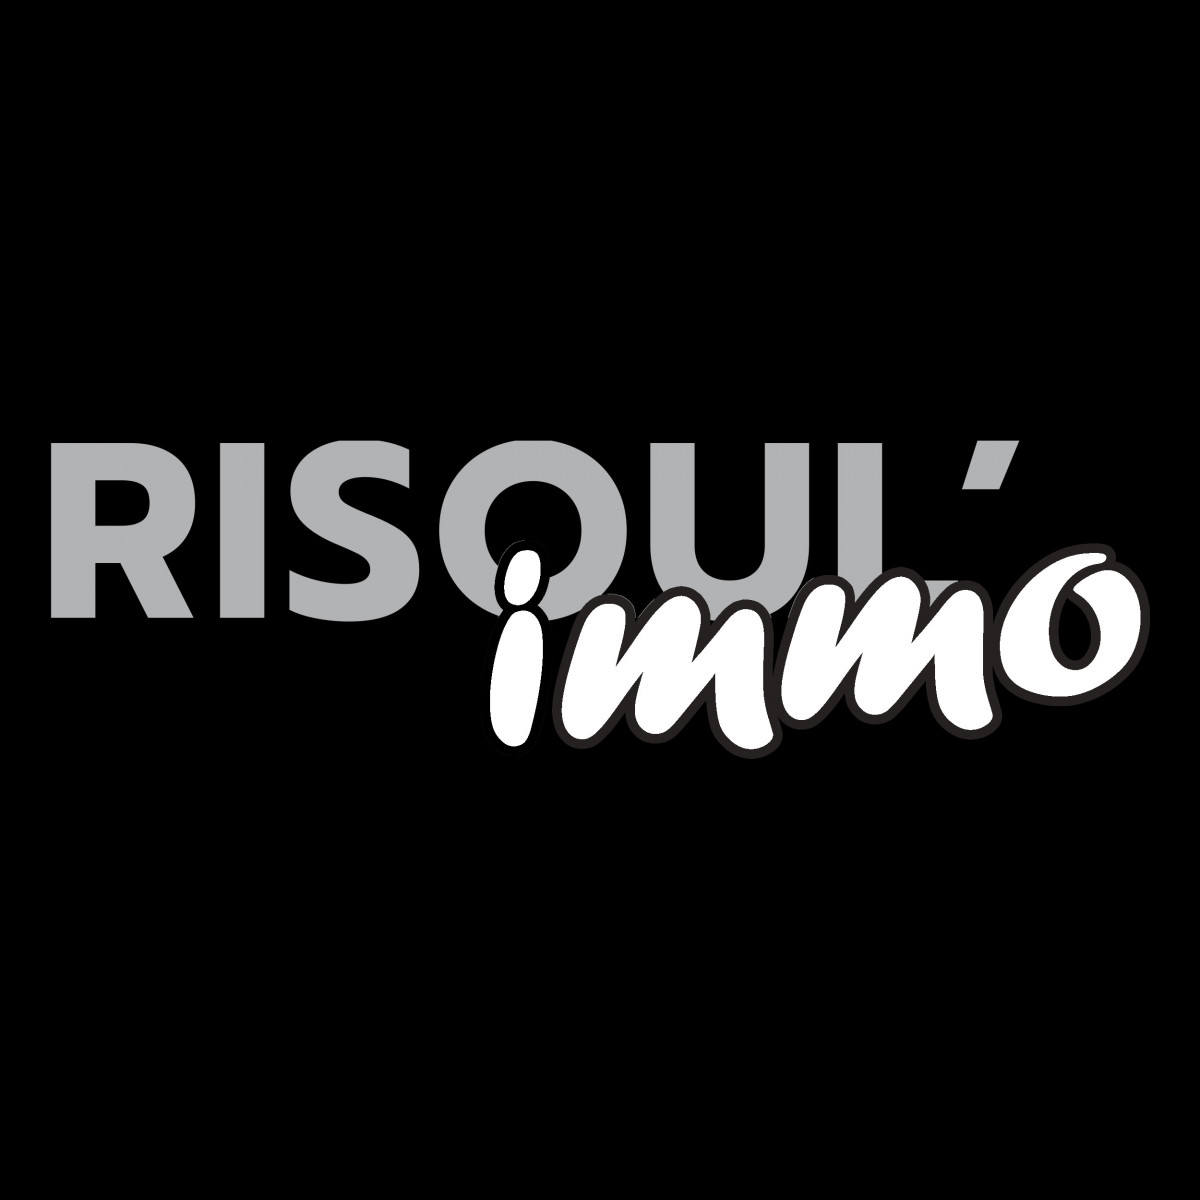 risoul_immo_logo.jpg